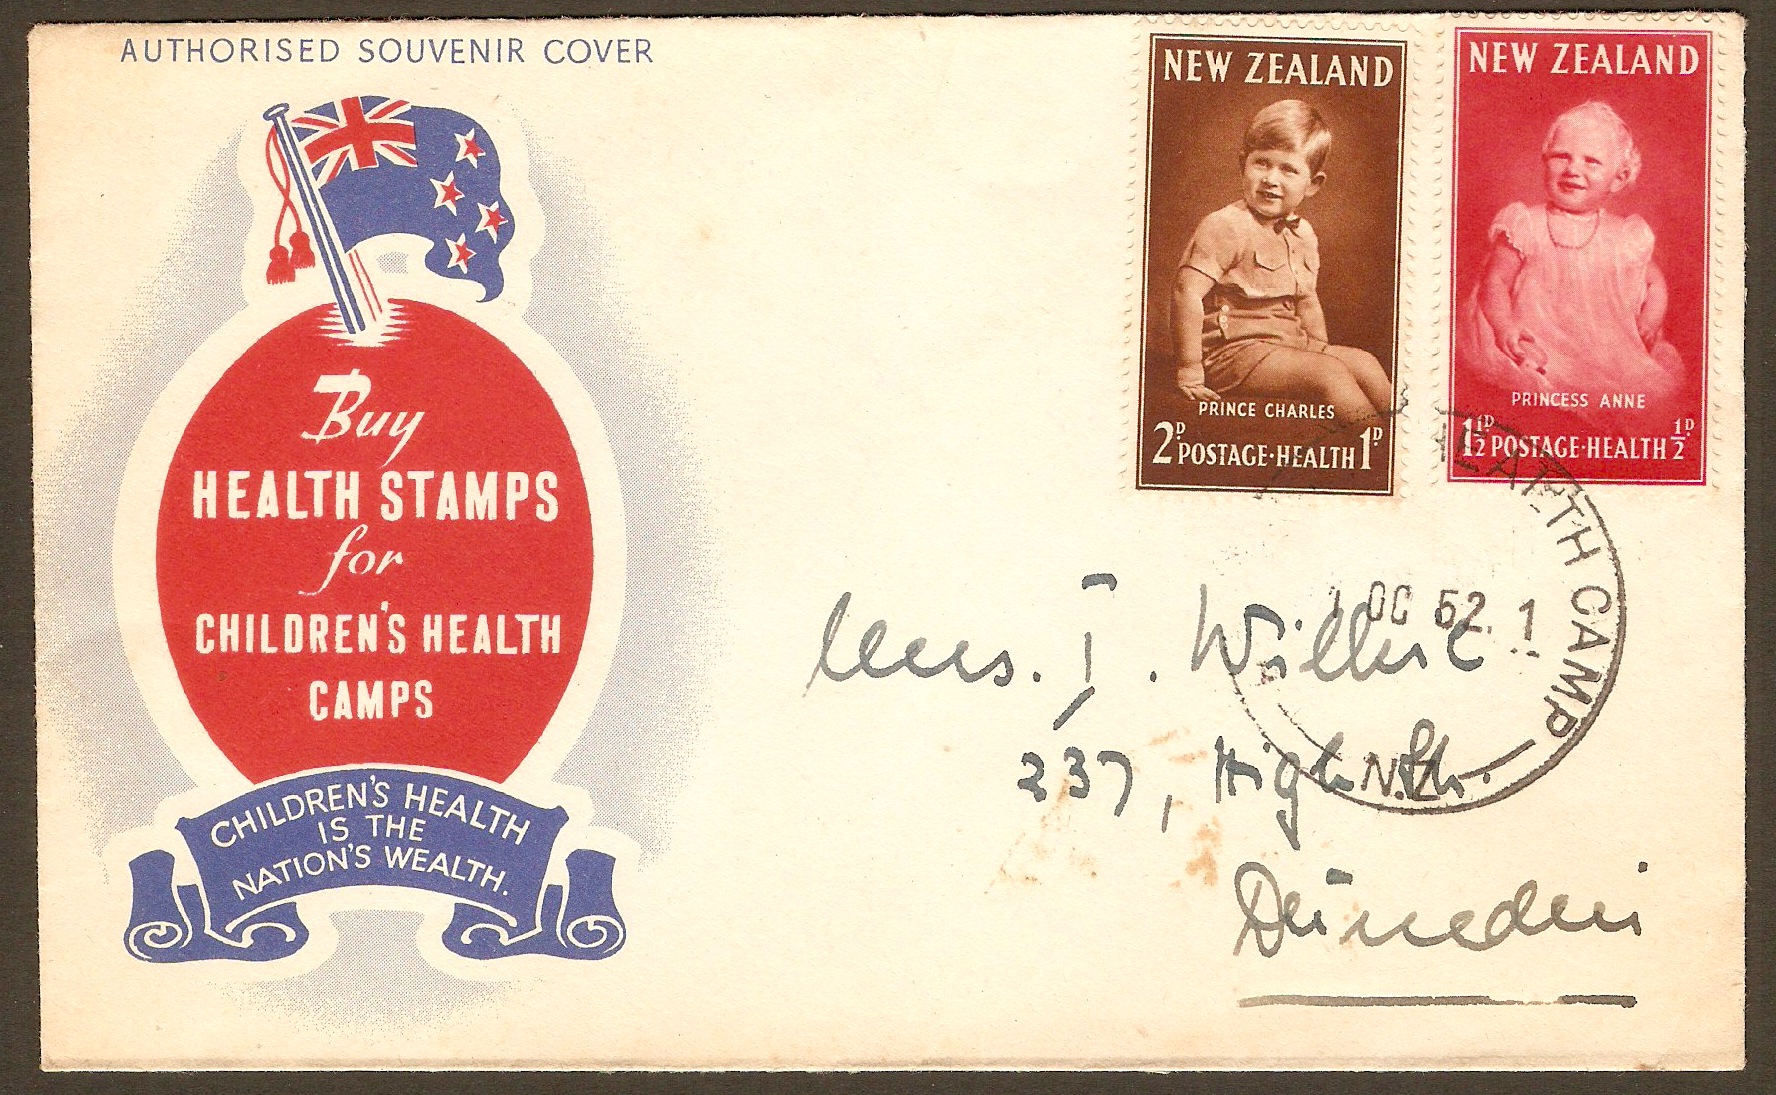 New Zealand 1952 Health Stamps set - Souvenir Cover